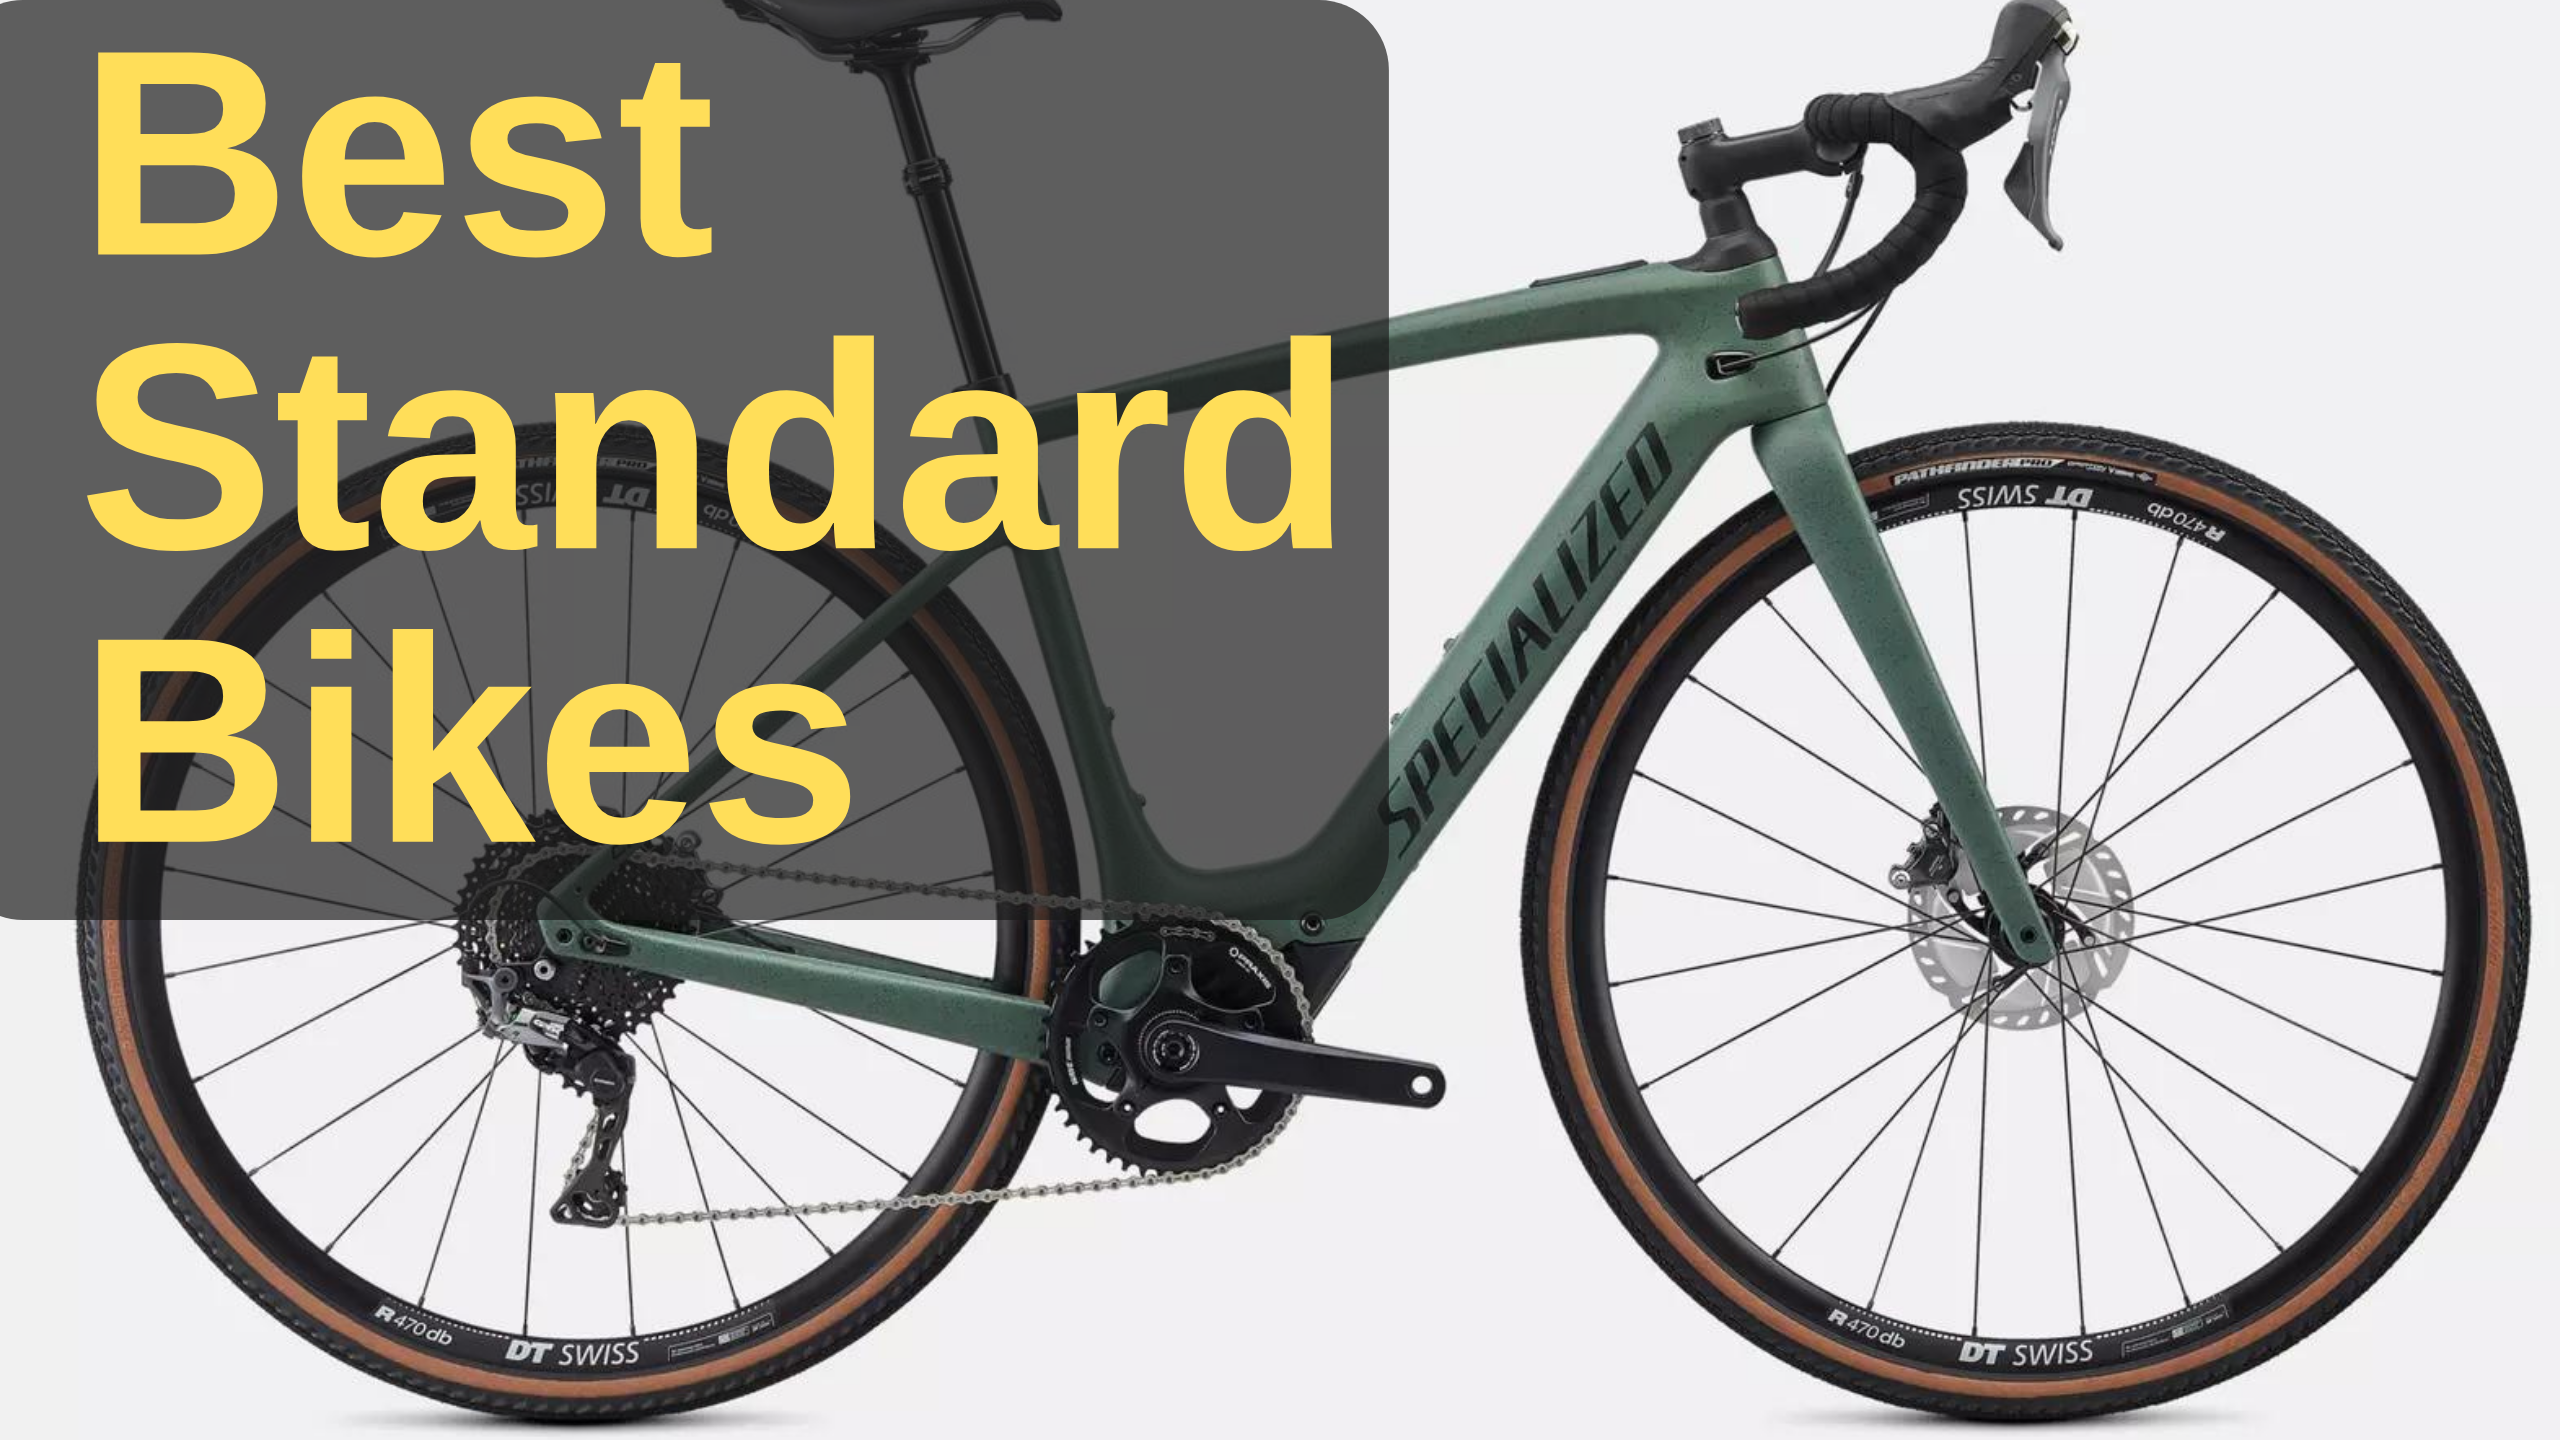 Best Standard Bike